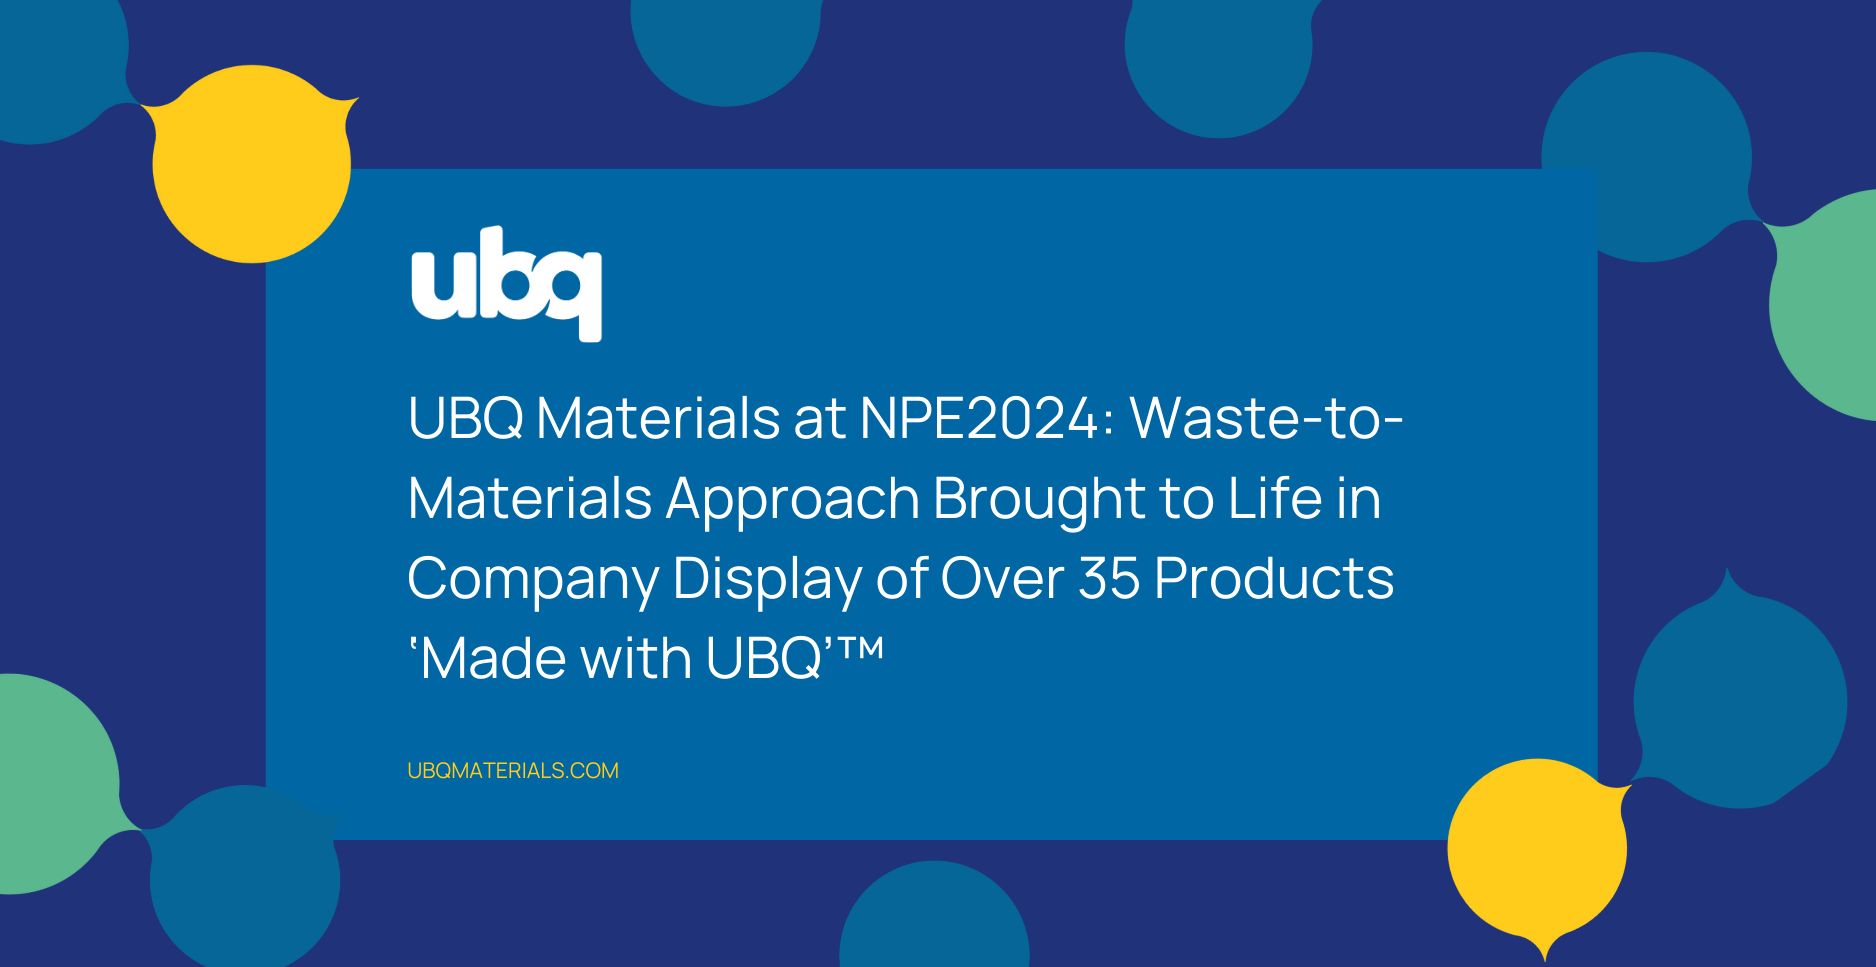 UBQ Materials at NPE 2024